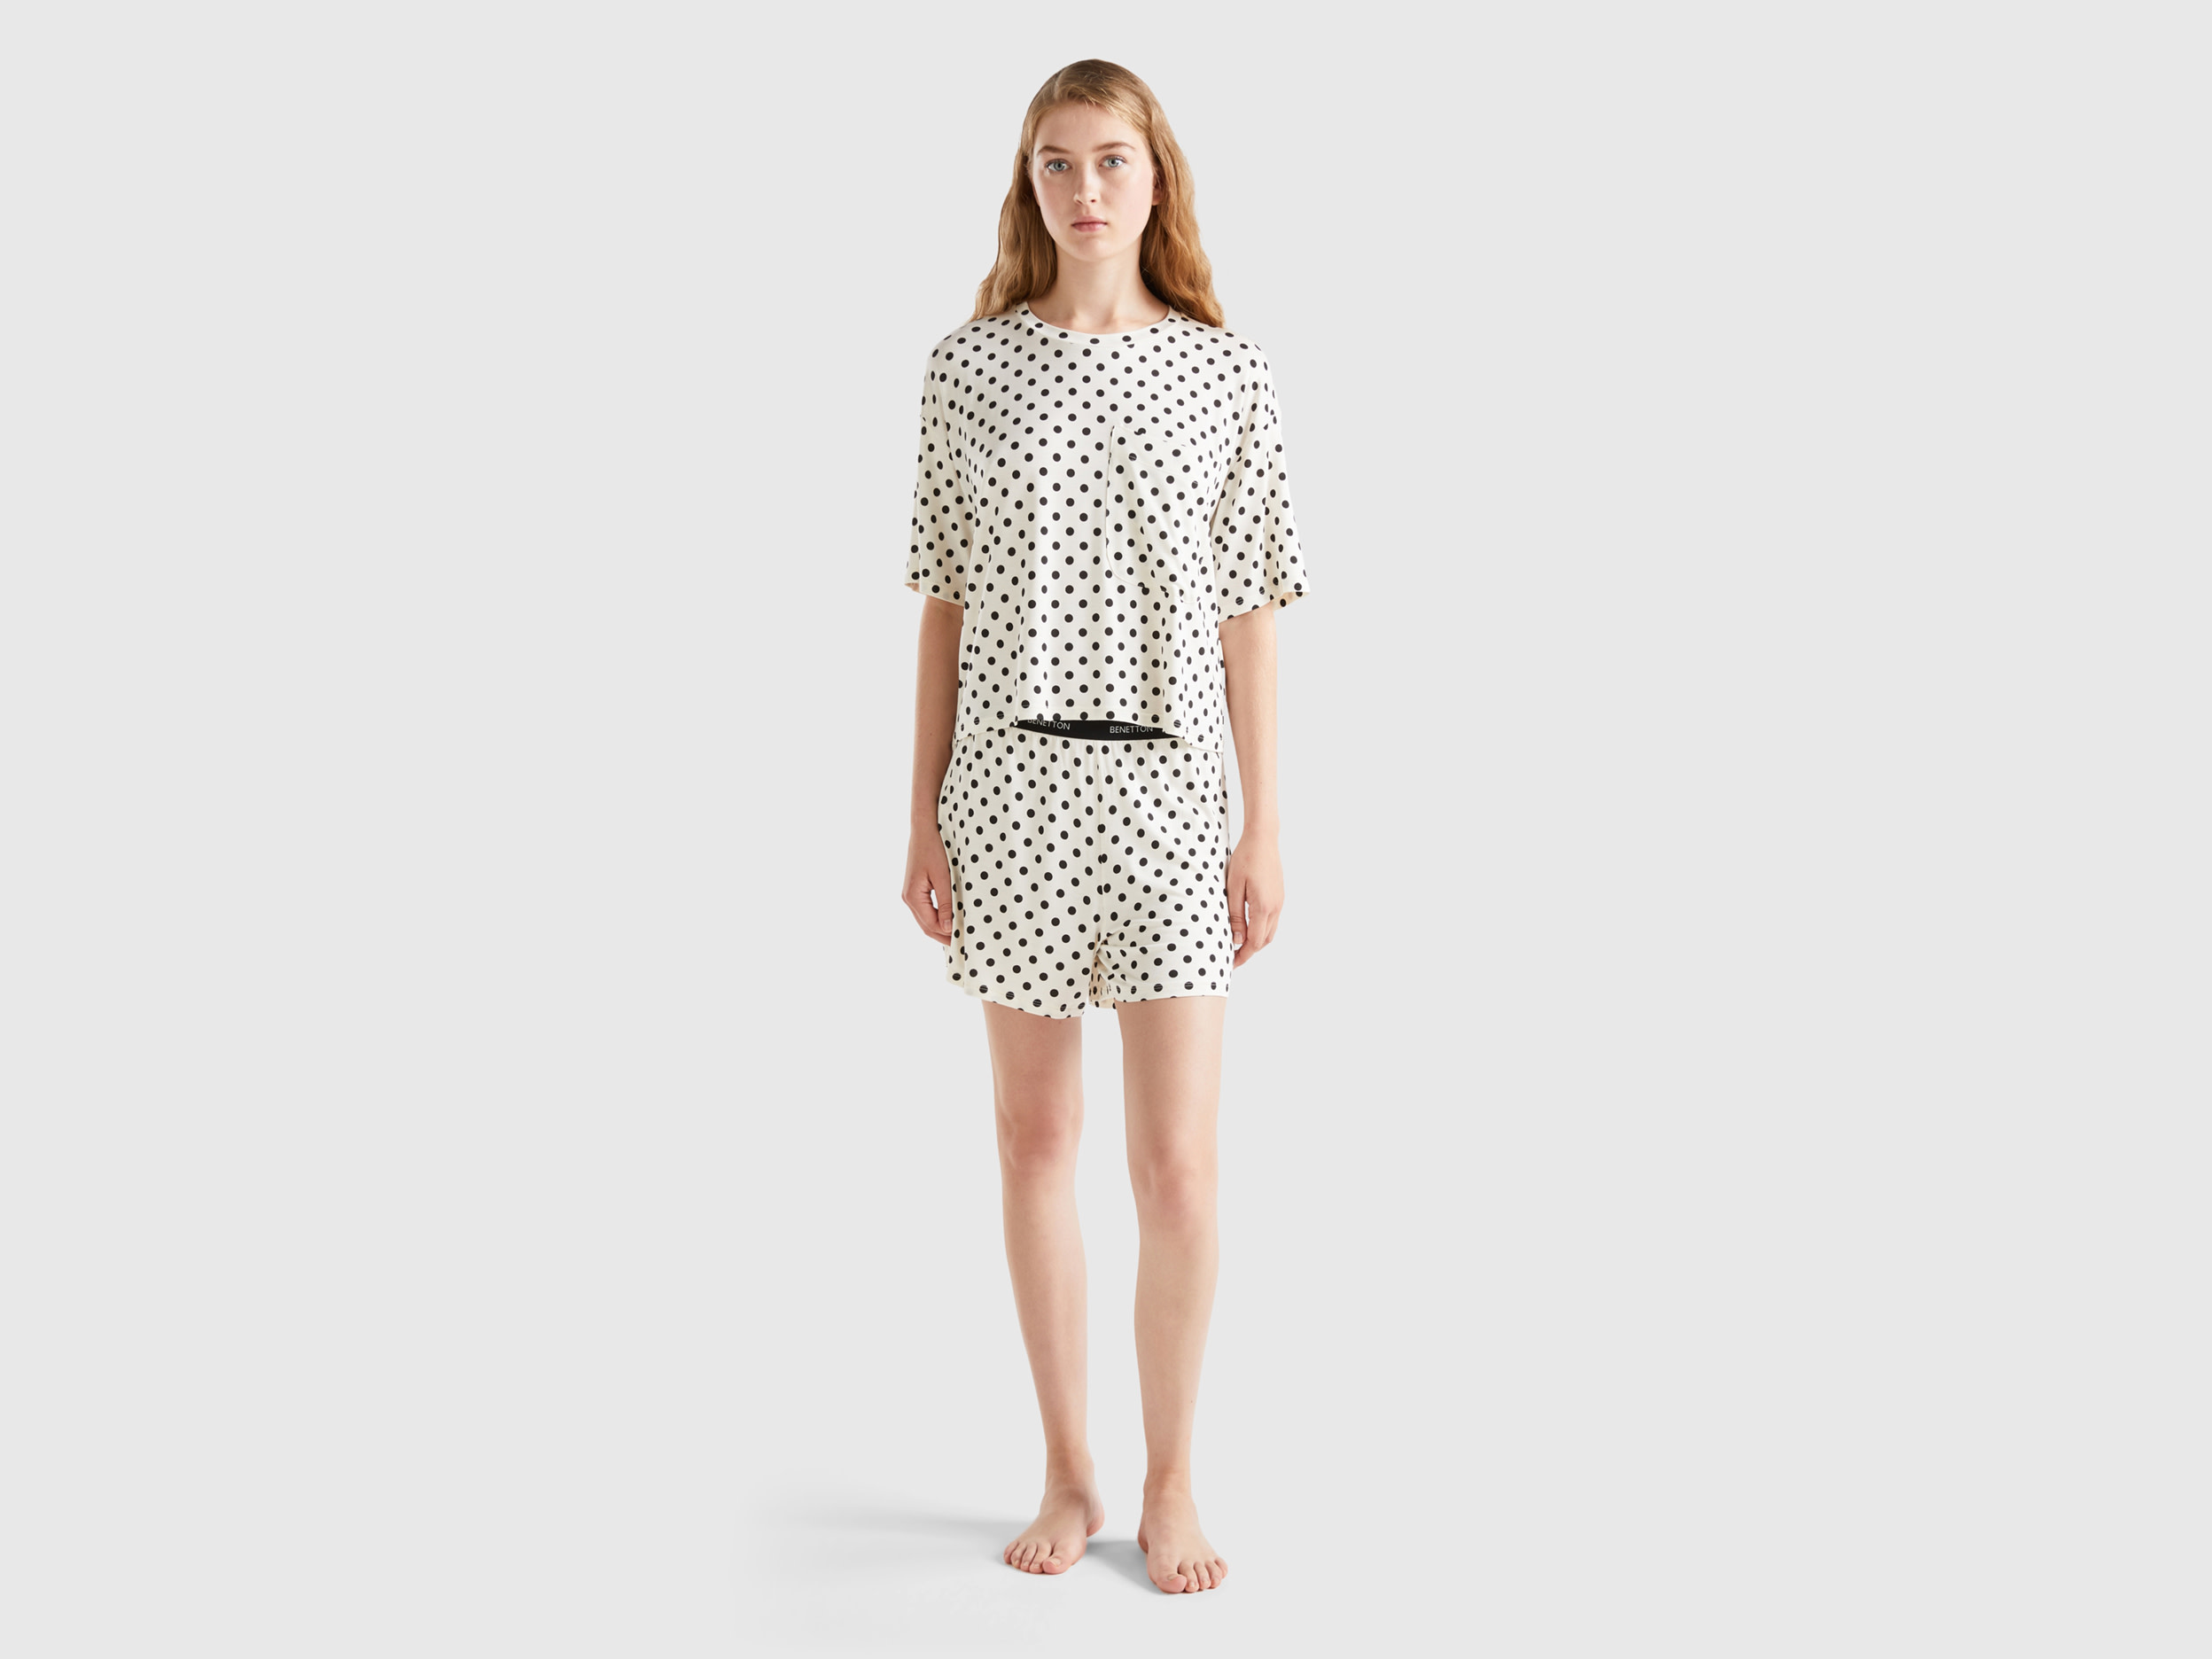 Benetton, Pyjamas With Polka Dot Shorts, size L, Creamy White, Women